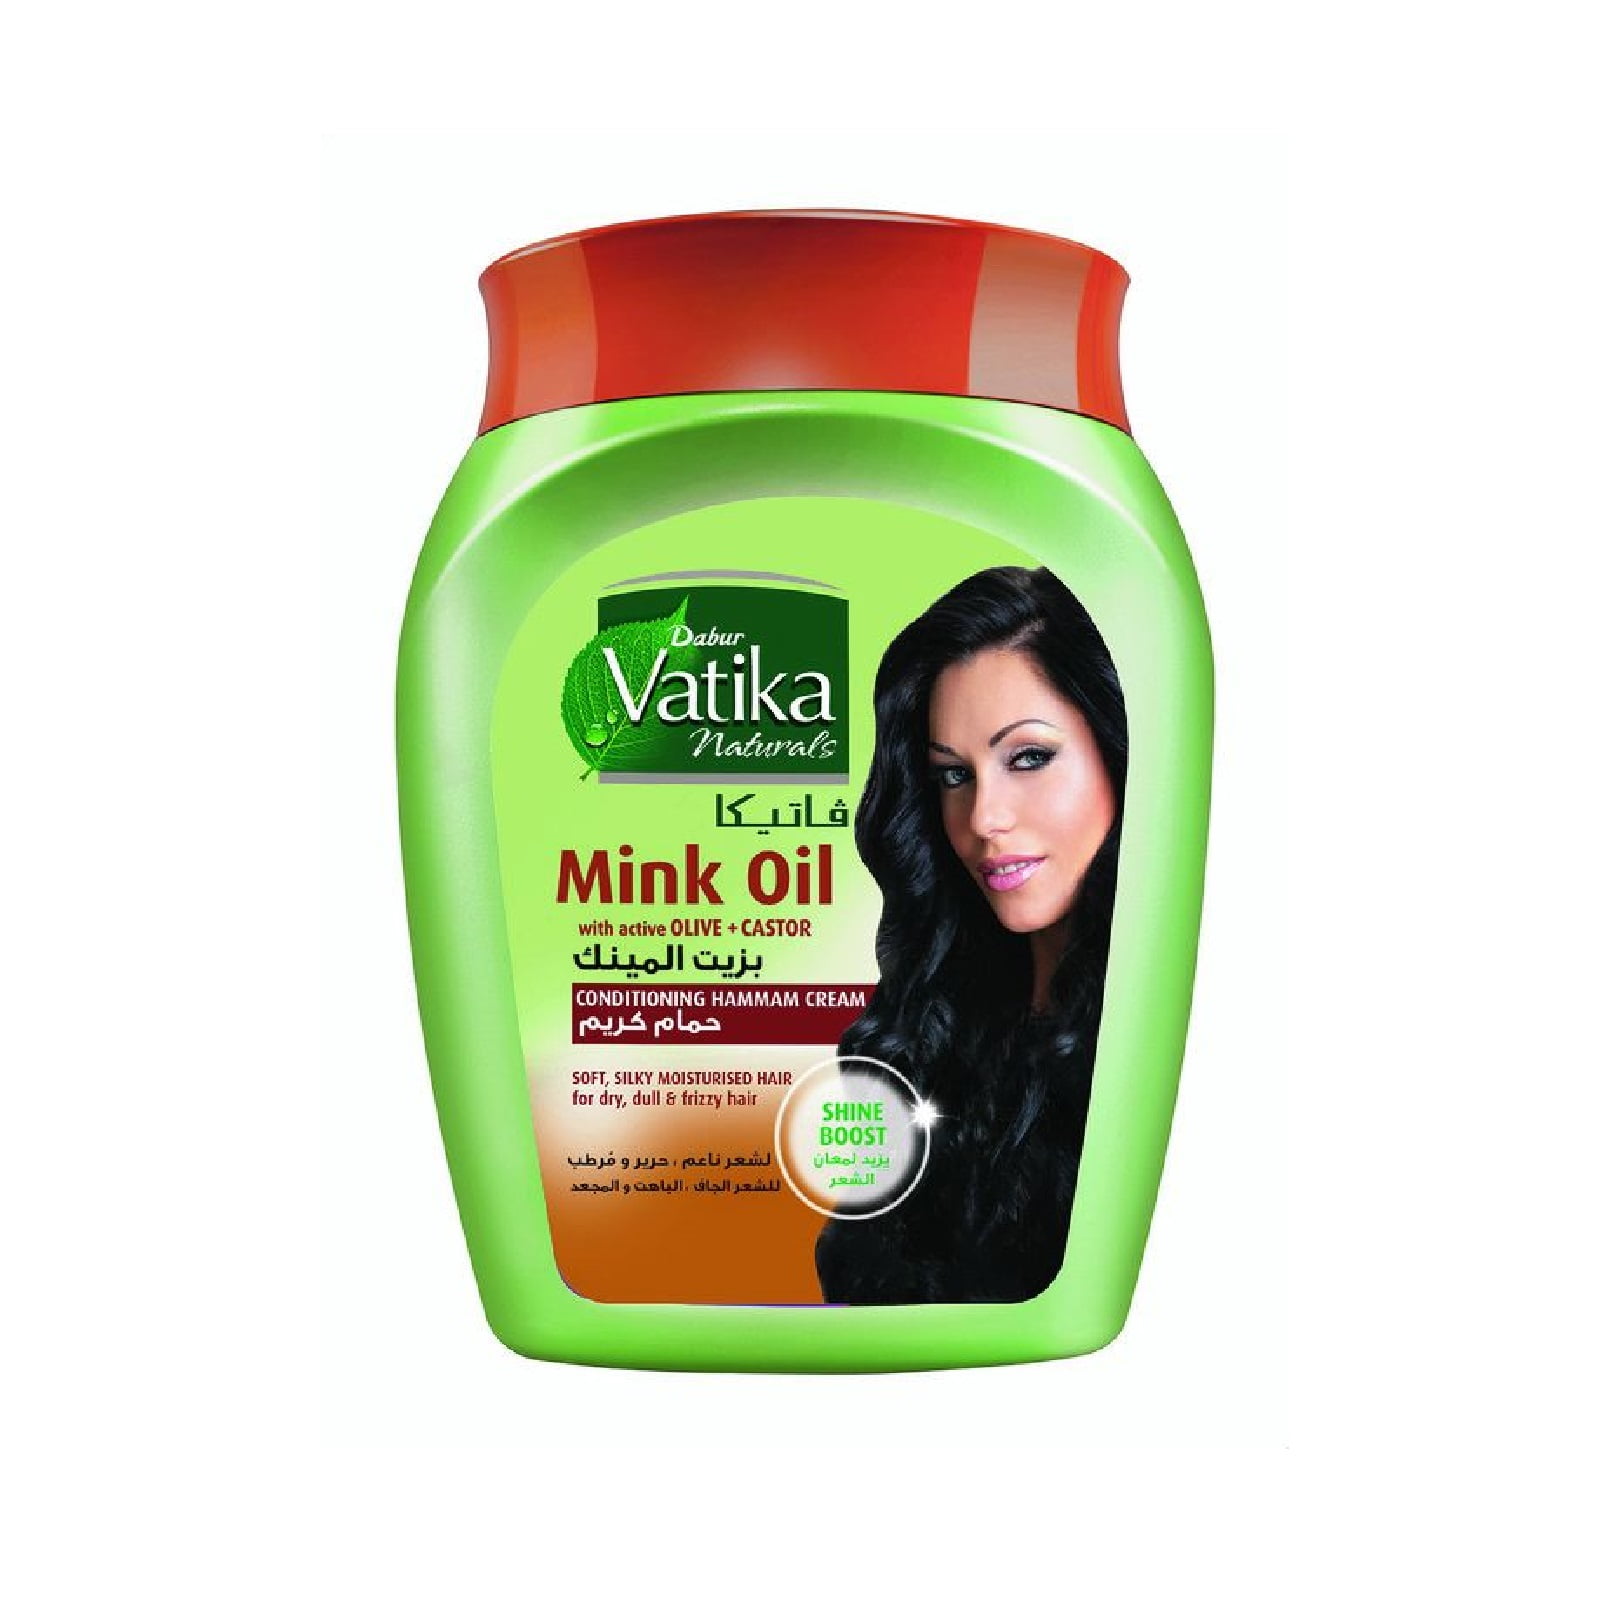 Vatika Hair Conditioner Cream Mink Oil 500 gm Elghazawy Shop